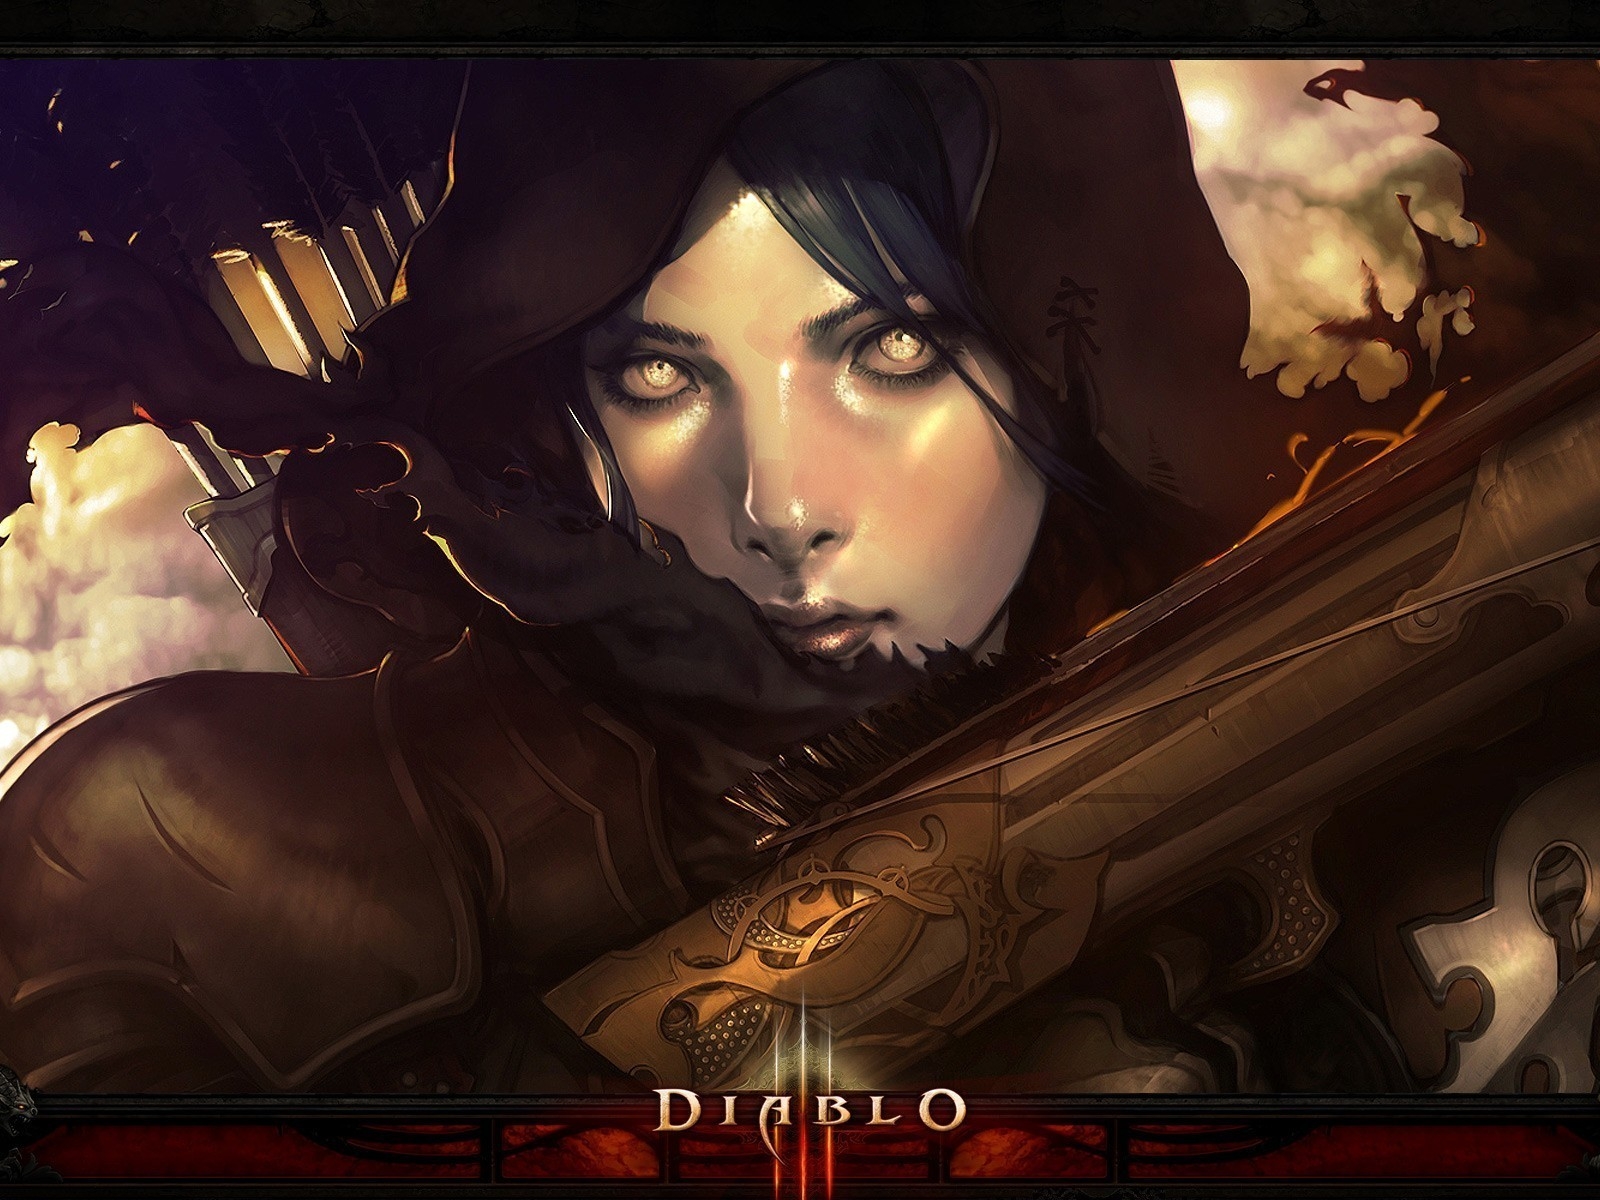 Diablo III Character for 1600 x 1200 resolution